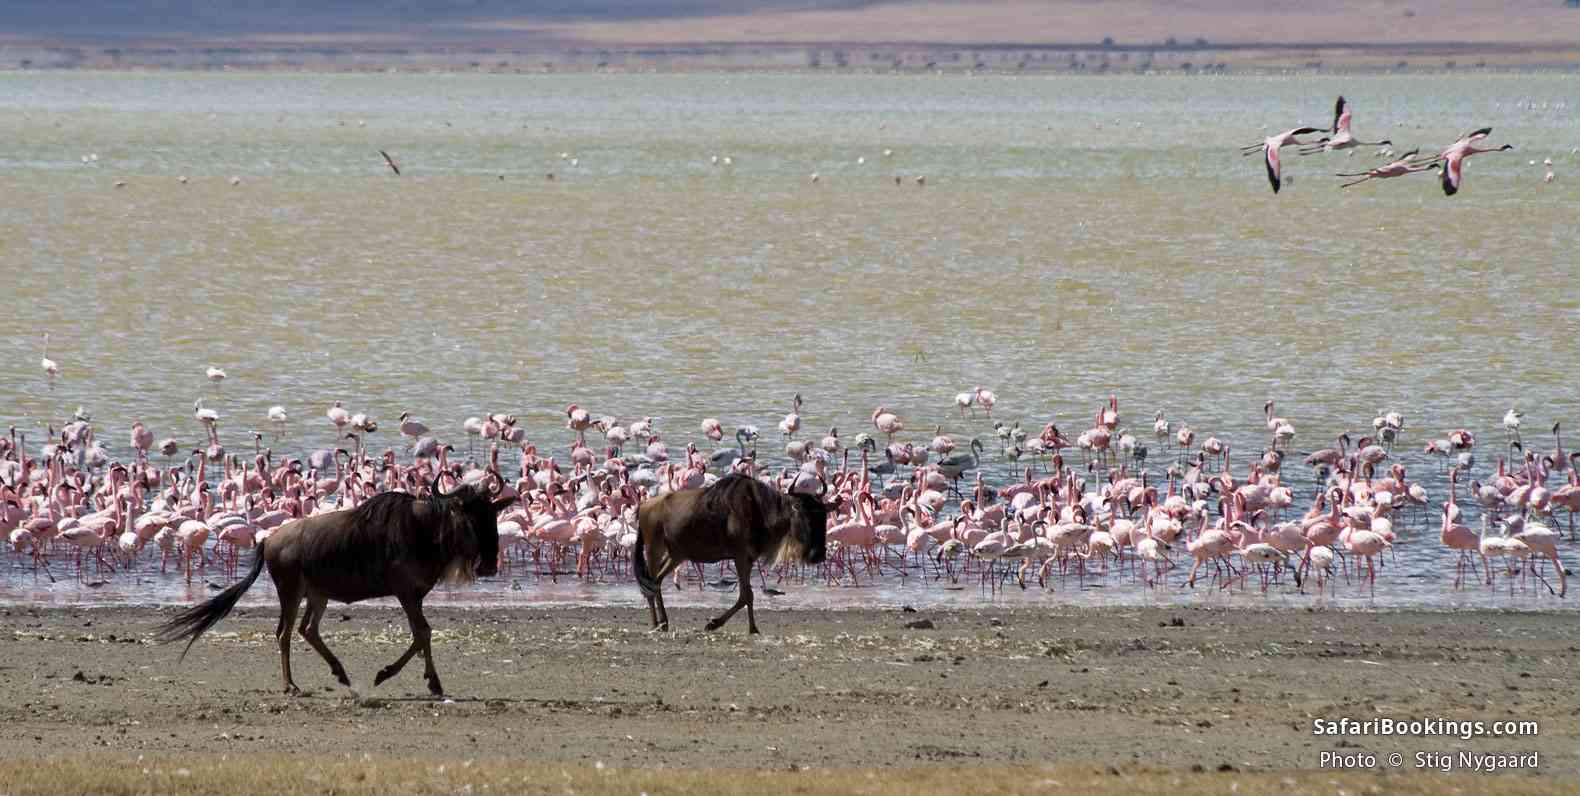 Wildebeests and flamingos